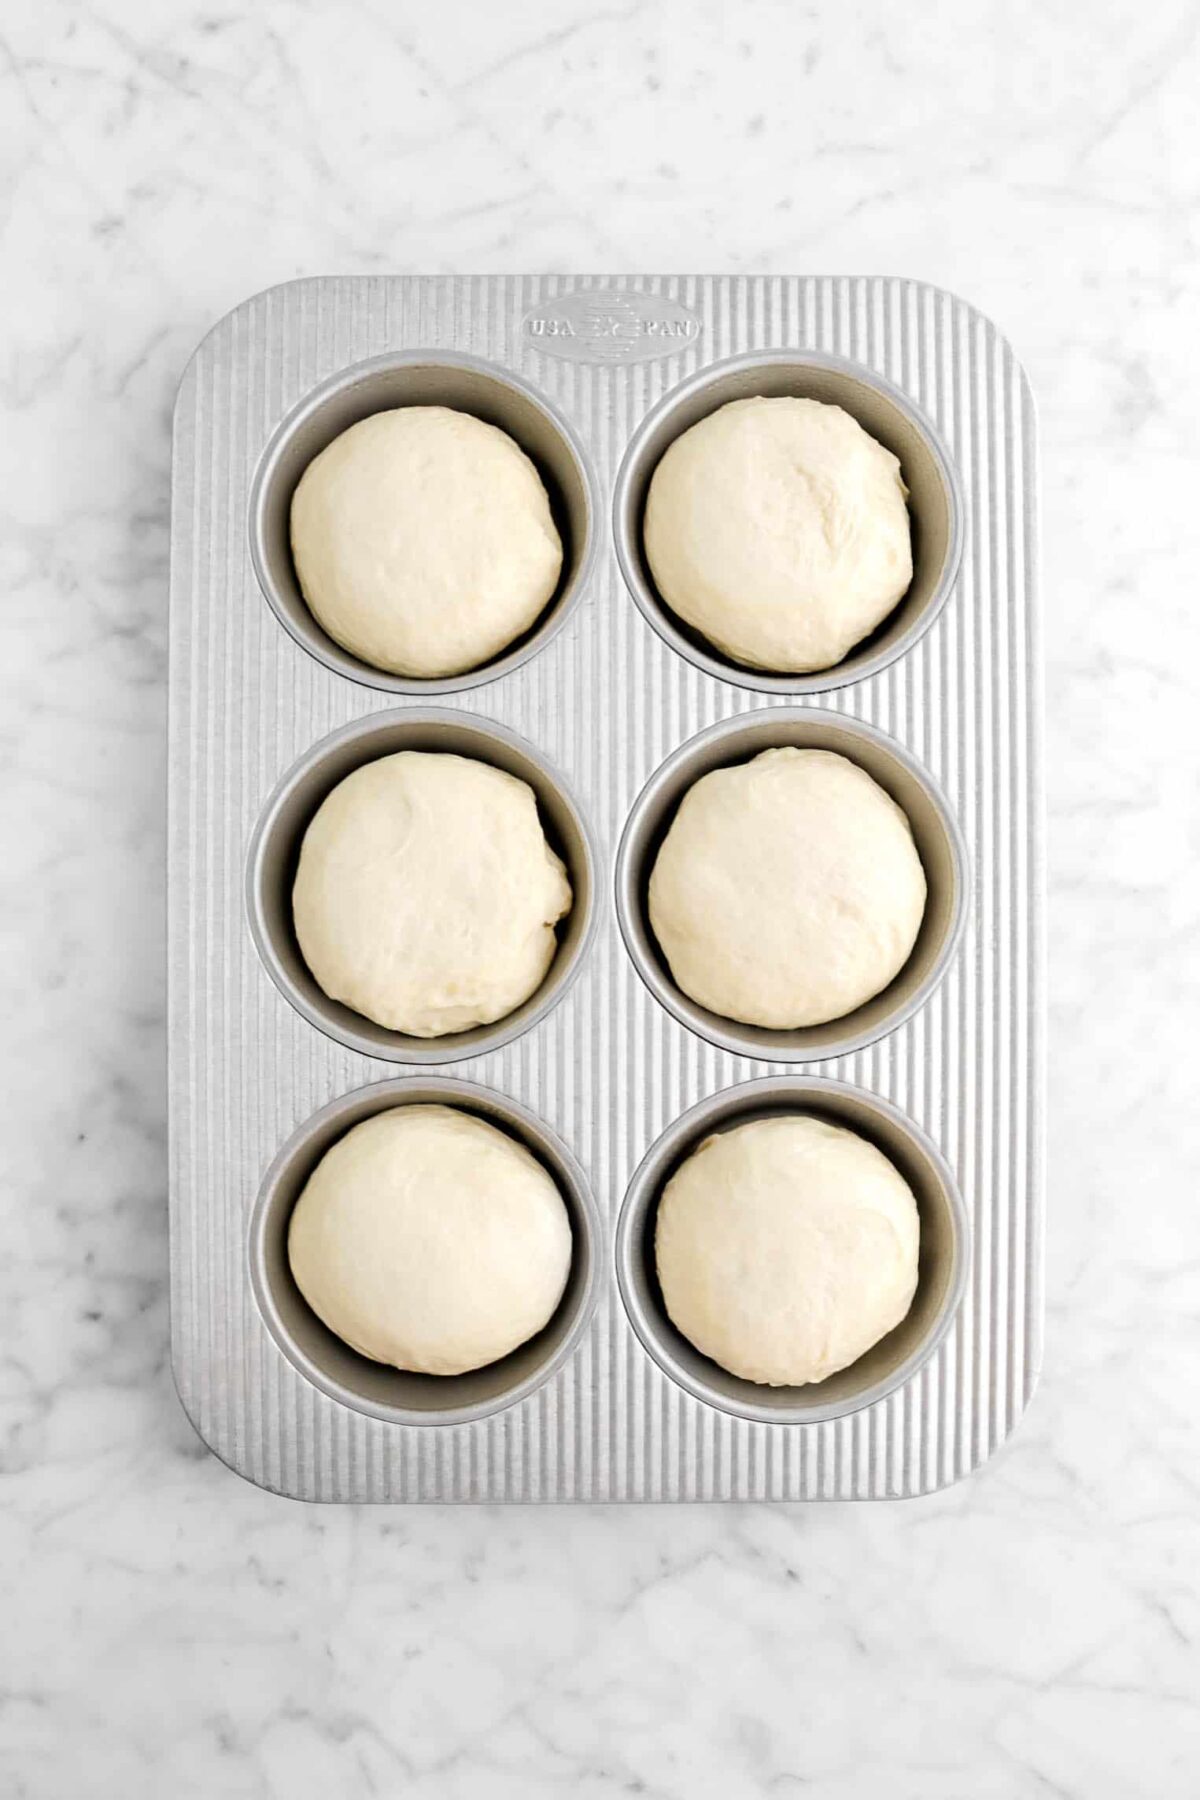 dough doubled in bulk in pan